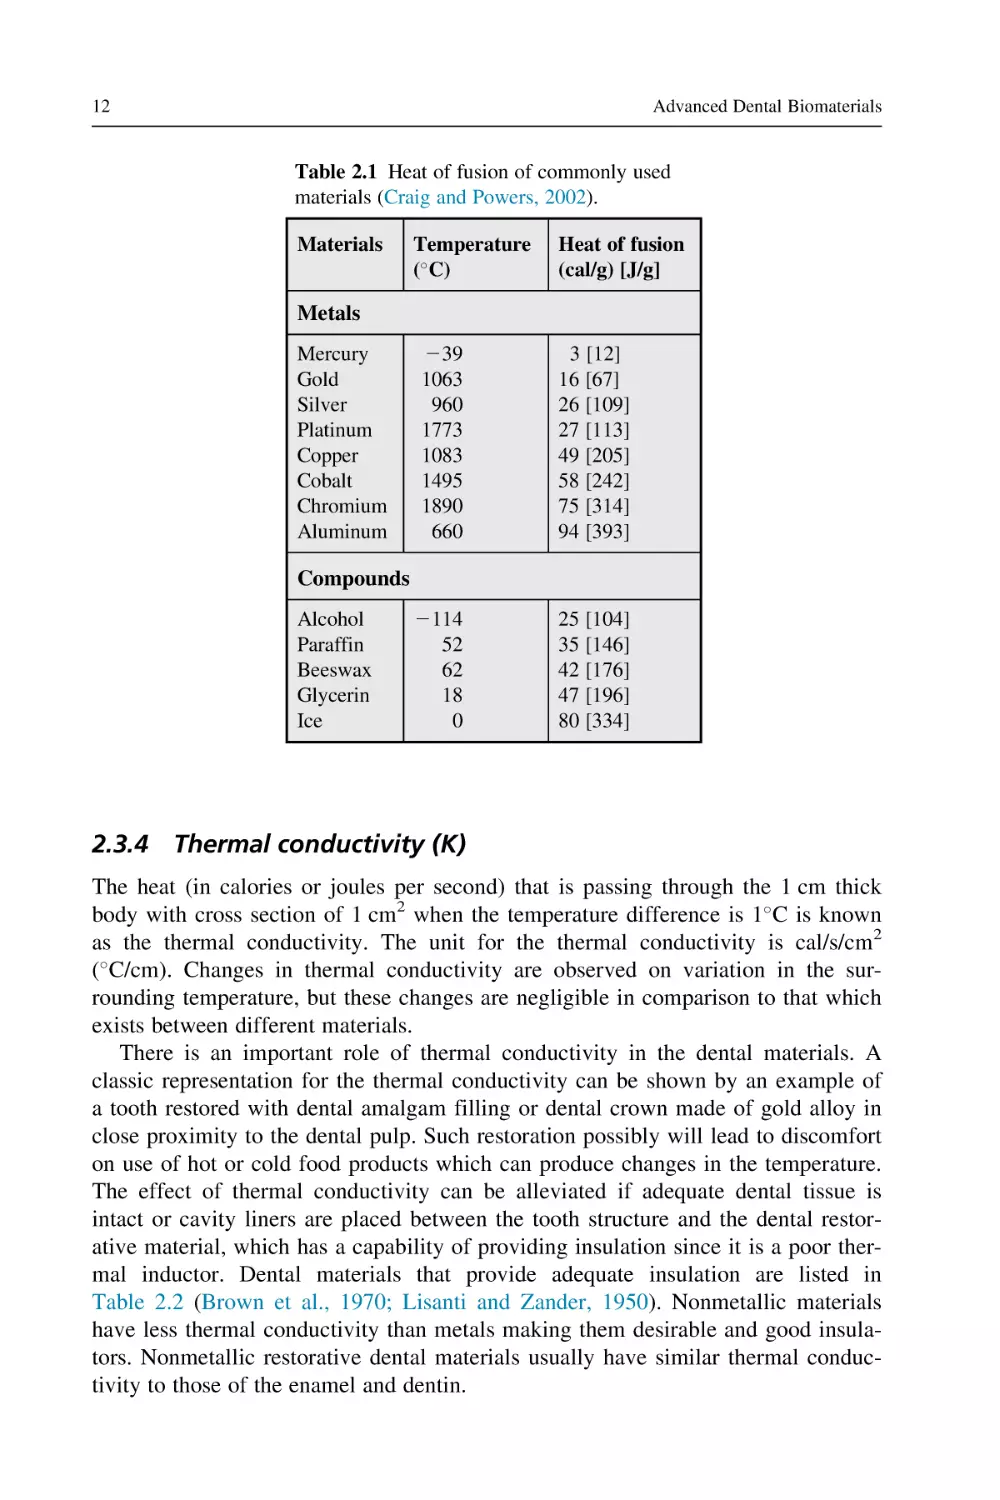 2.3.4 Thermal conductivity (K)